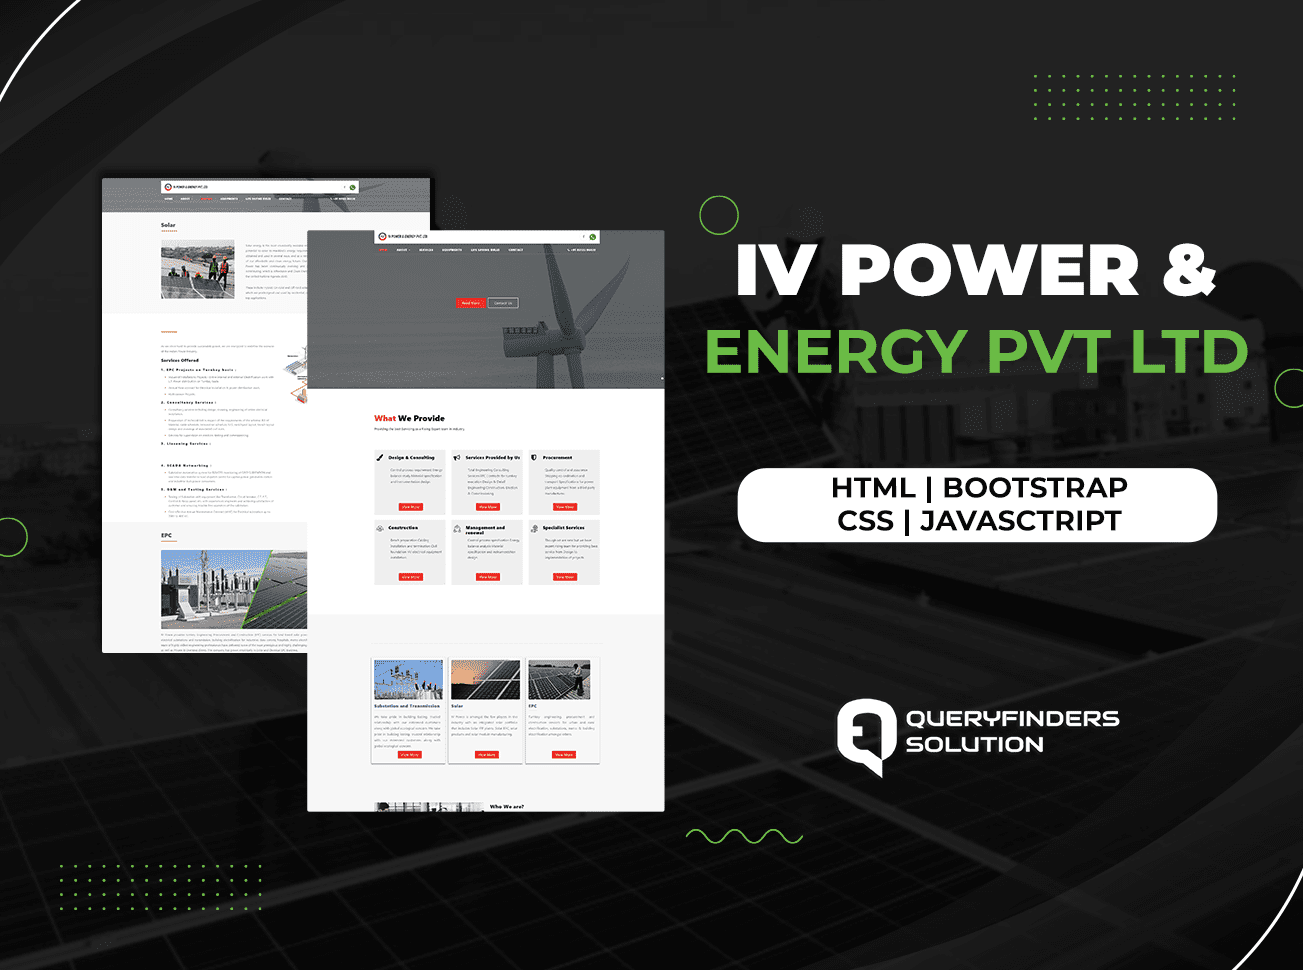 IV Power & Energy PVT LTD